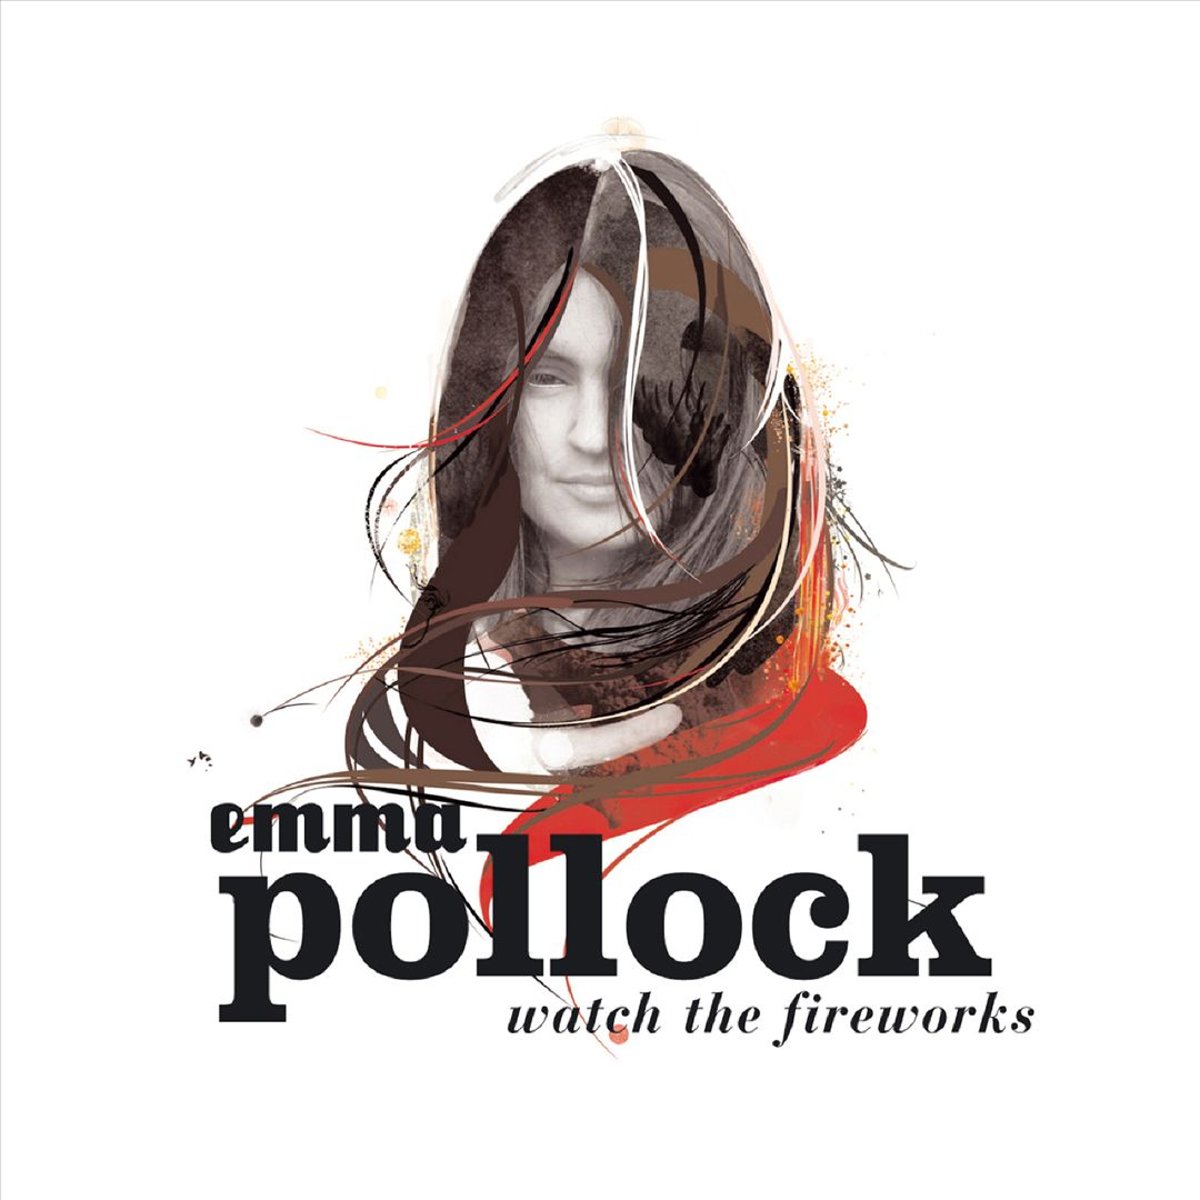 Watch The Fireworks | Emma Pollock